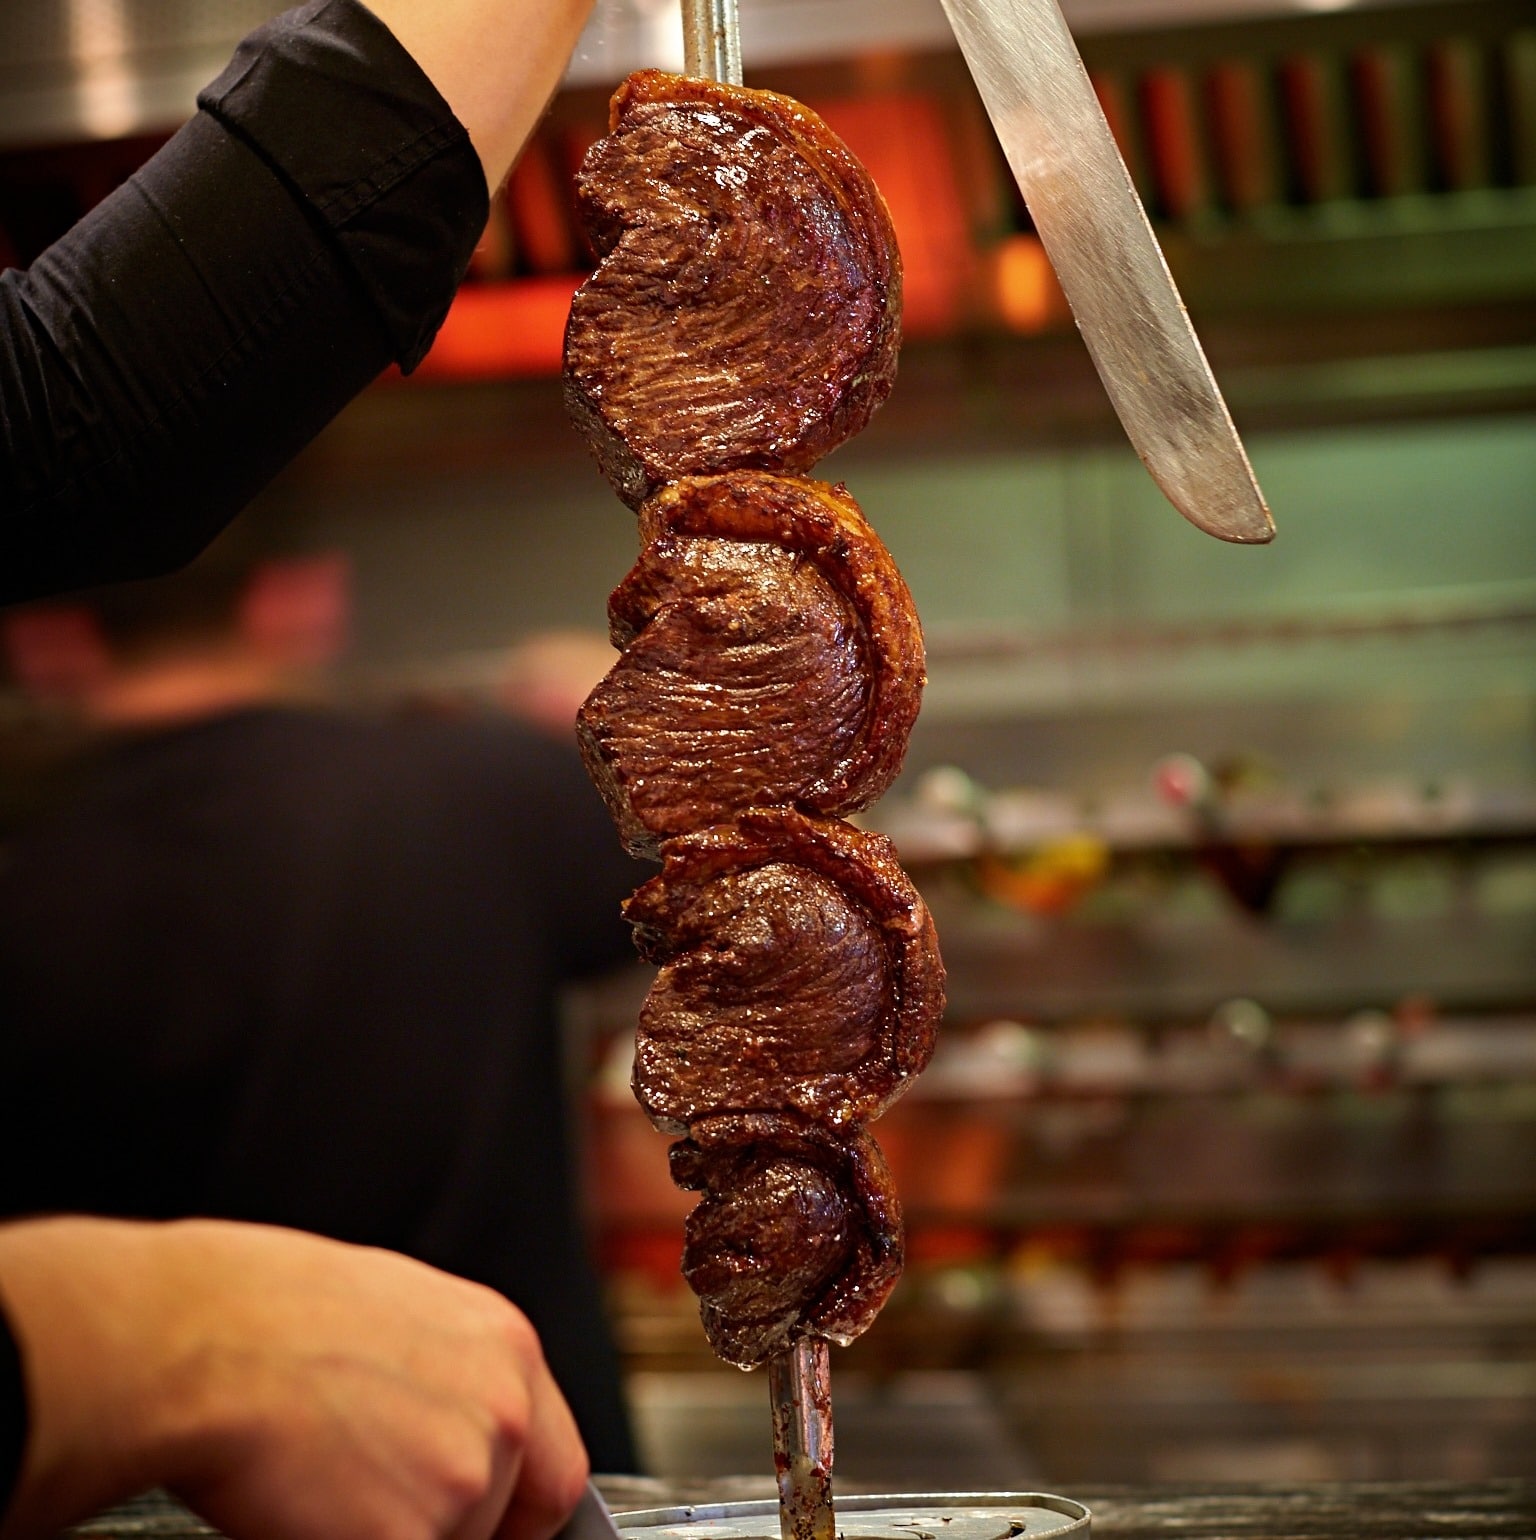 Meat being sliced at Manchester's rodizio restaurant, Bem Brasil